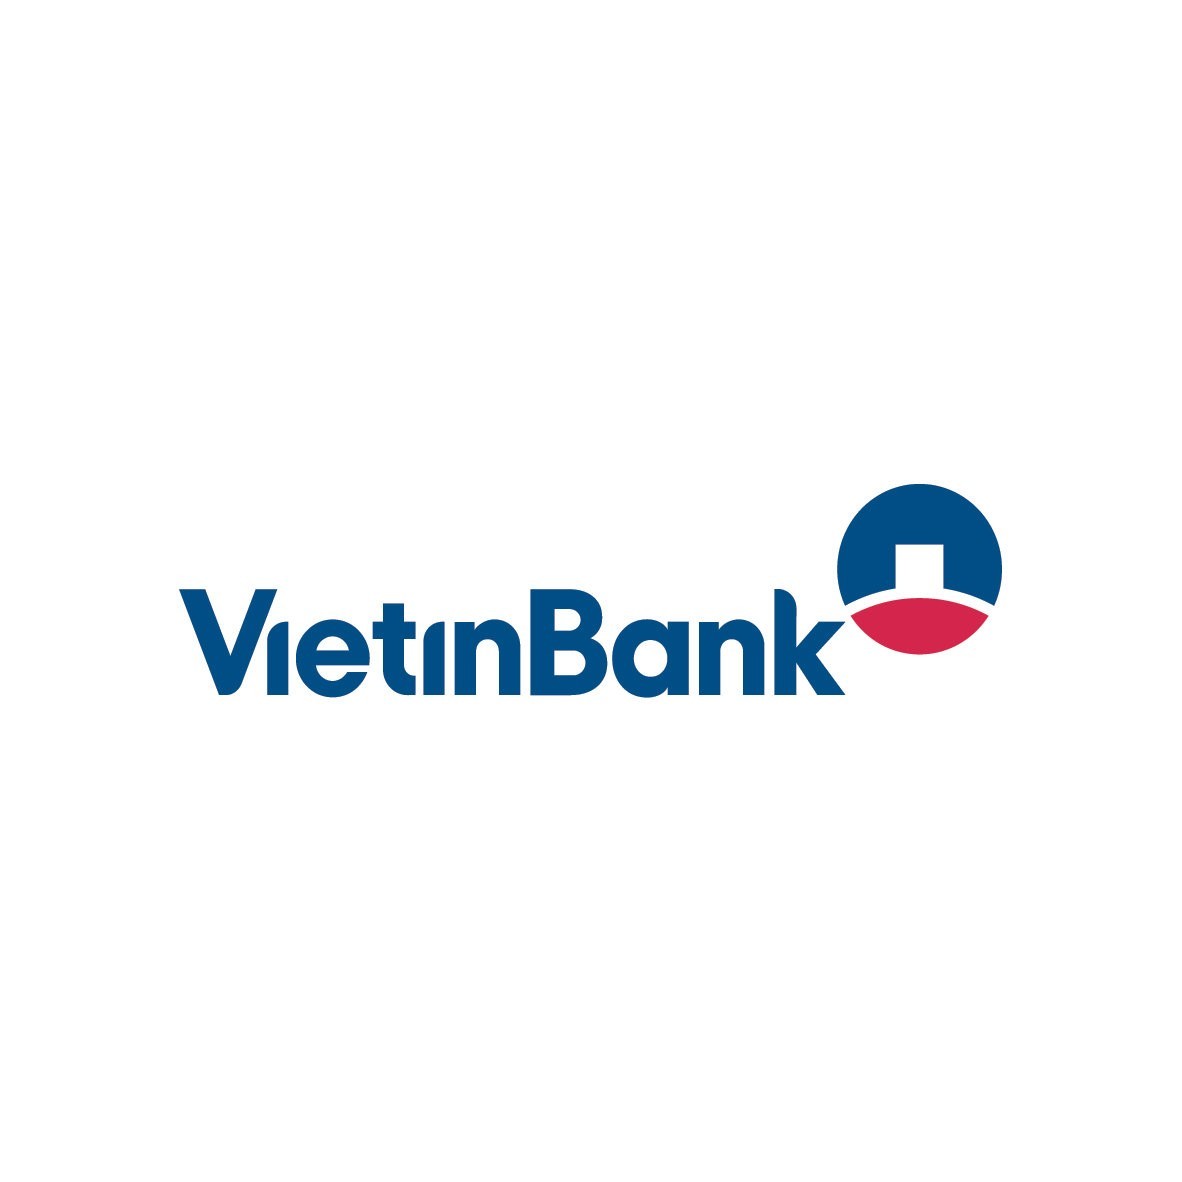 viettinbank logo